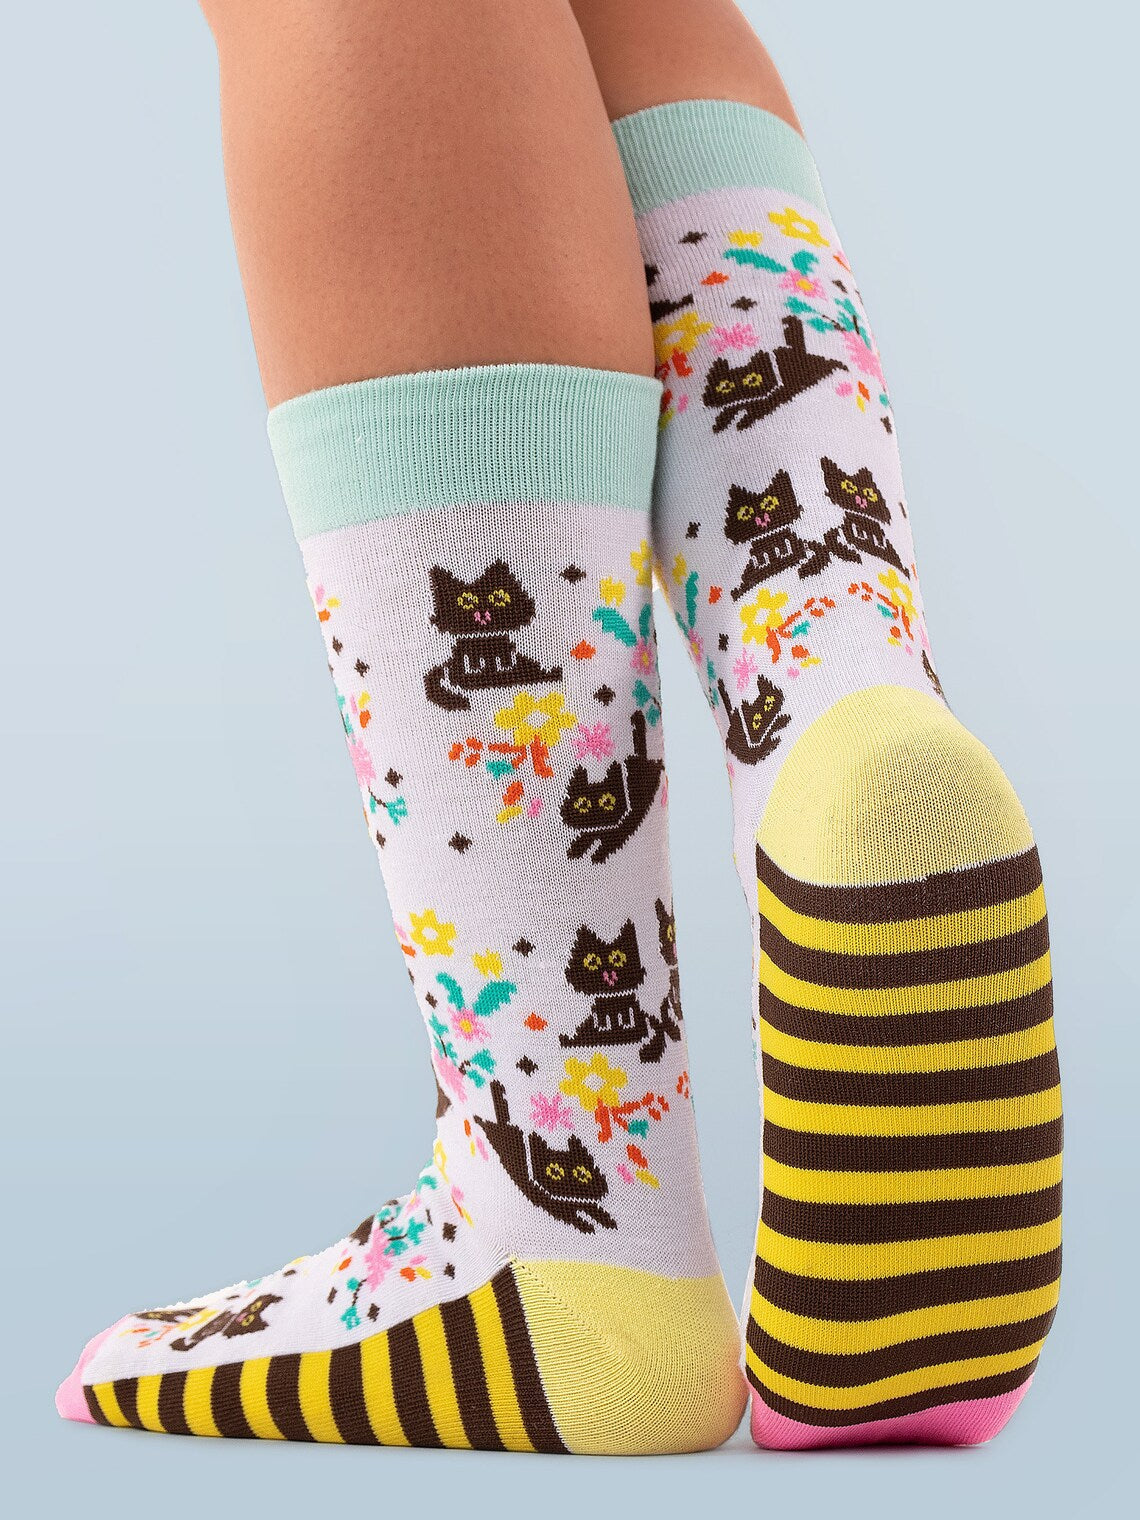 Candy Kitty Socks